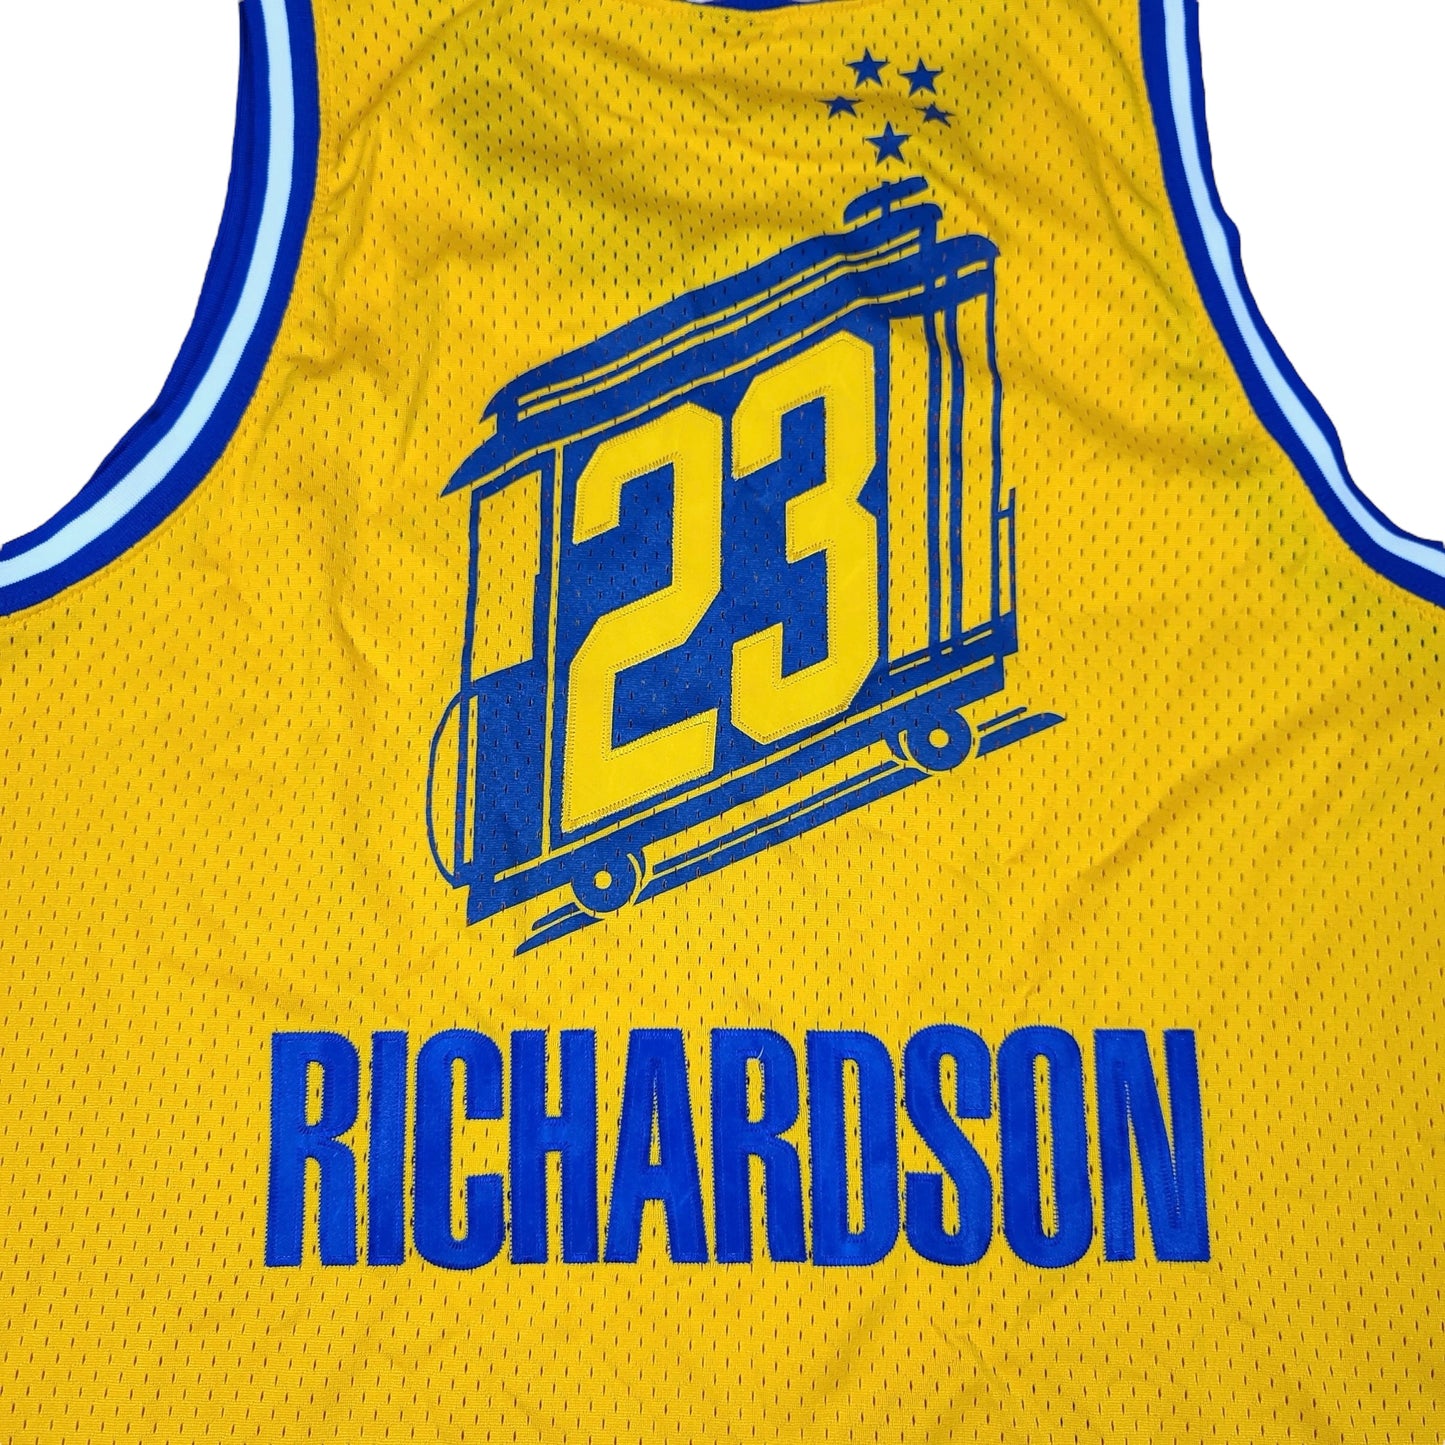 Jason Richardson #23 Golden State Warriors Yellow Nike Basketball Jersey